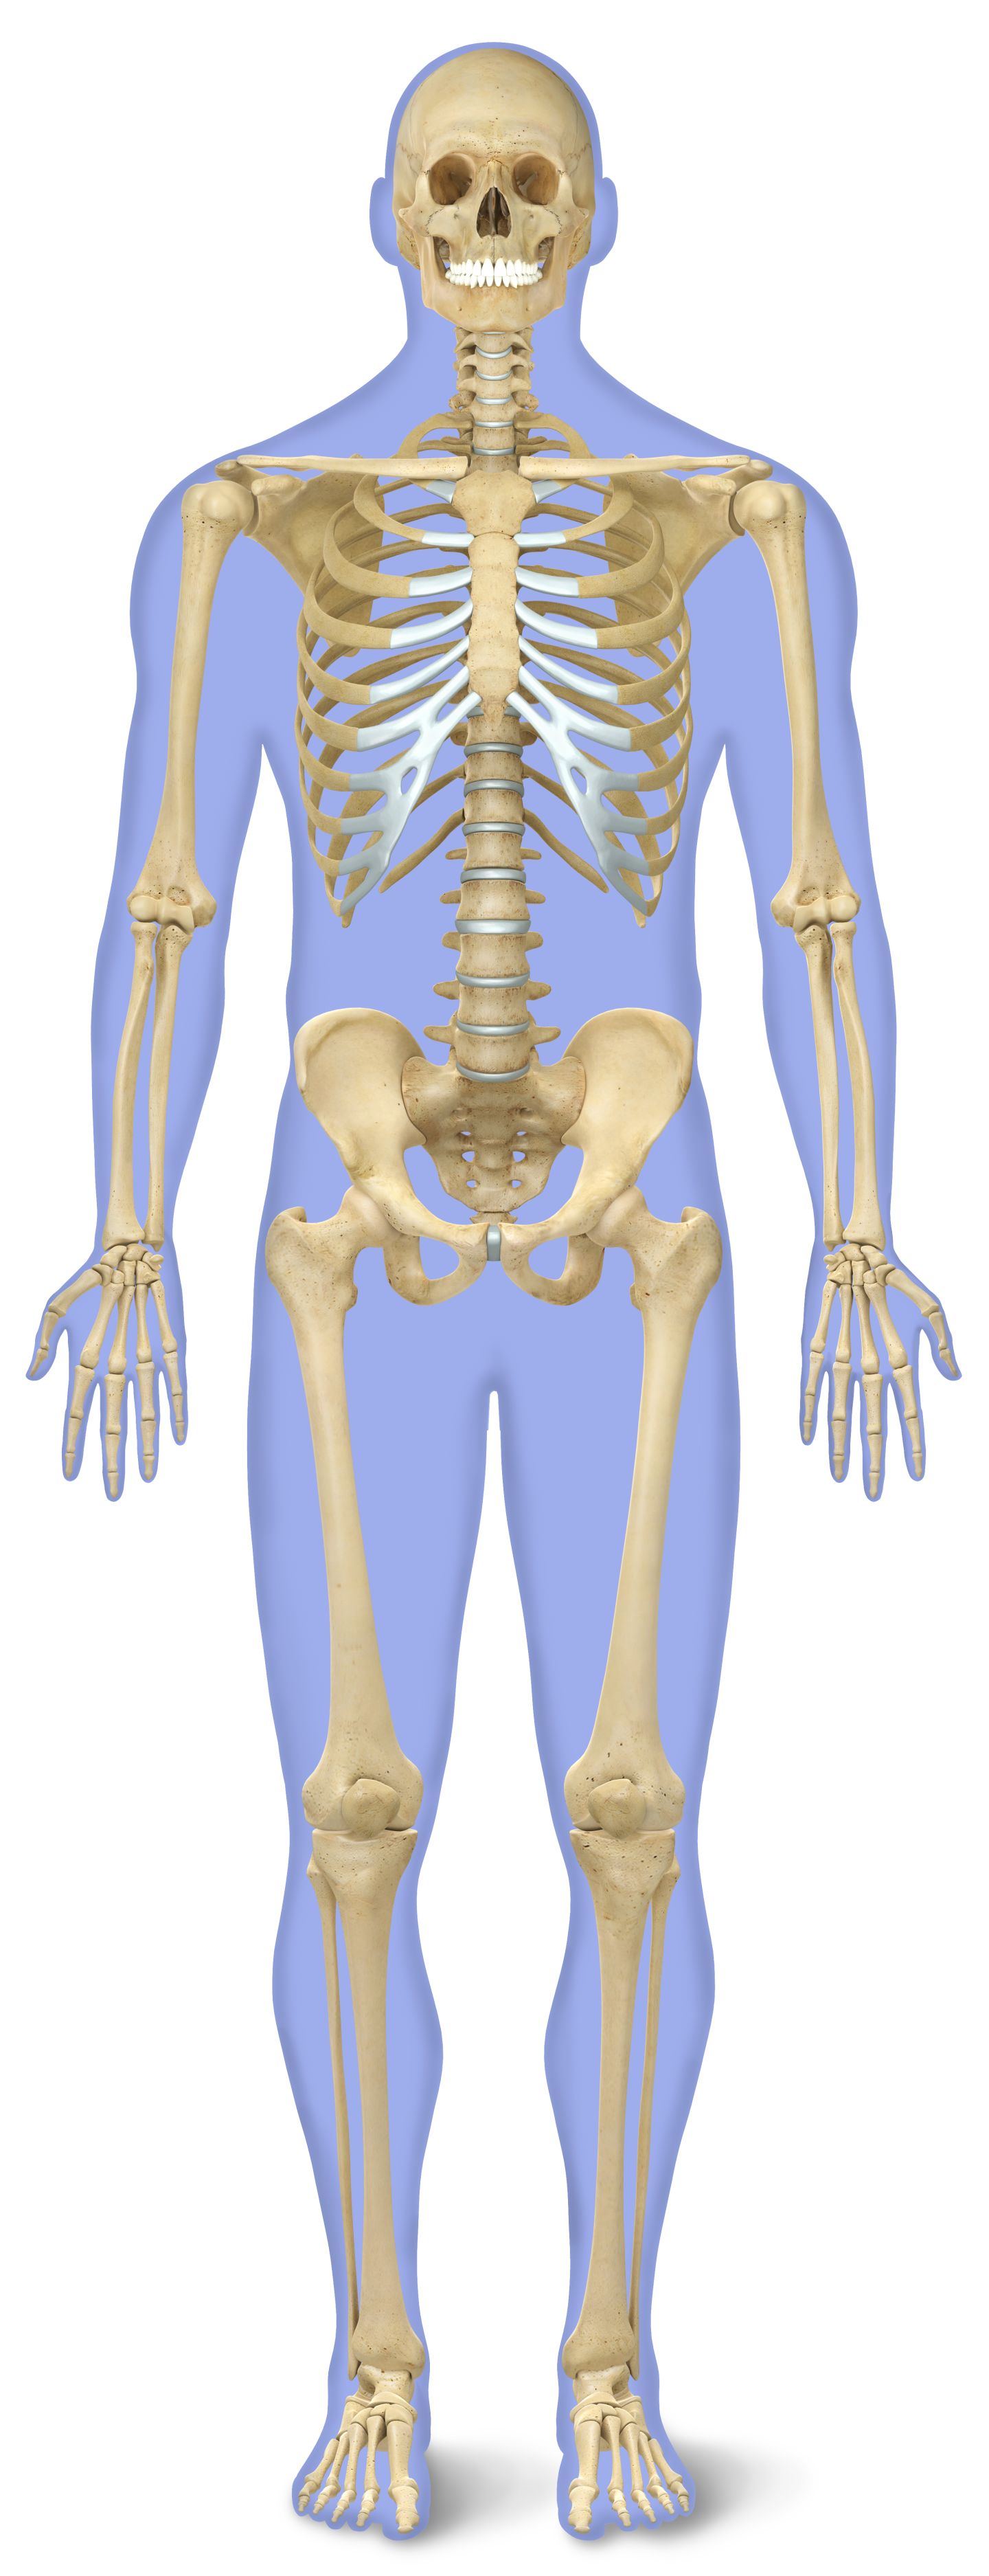 Number of Bones in Human Body | Skeleton Facts | DK Find Out